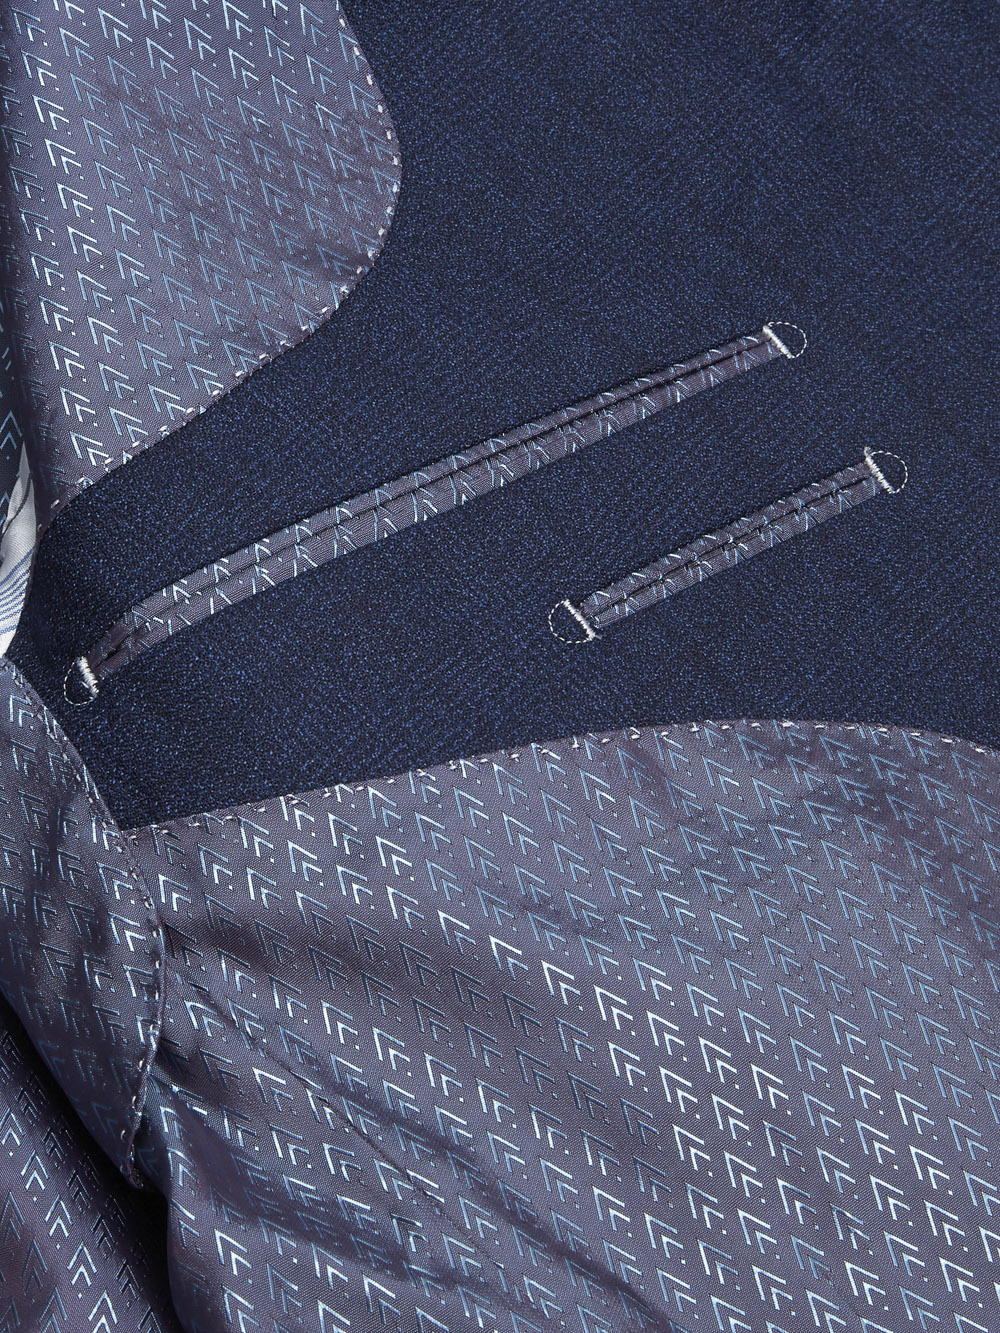 Douglas Blue Check Valdino 3 Piece Suit - Tom Murphy's Formal and Menswear